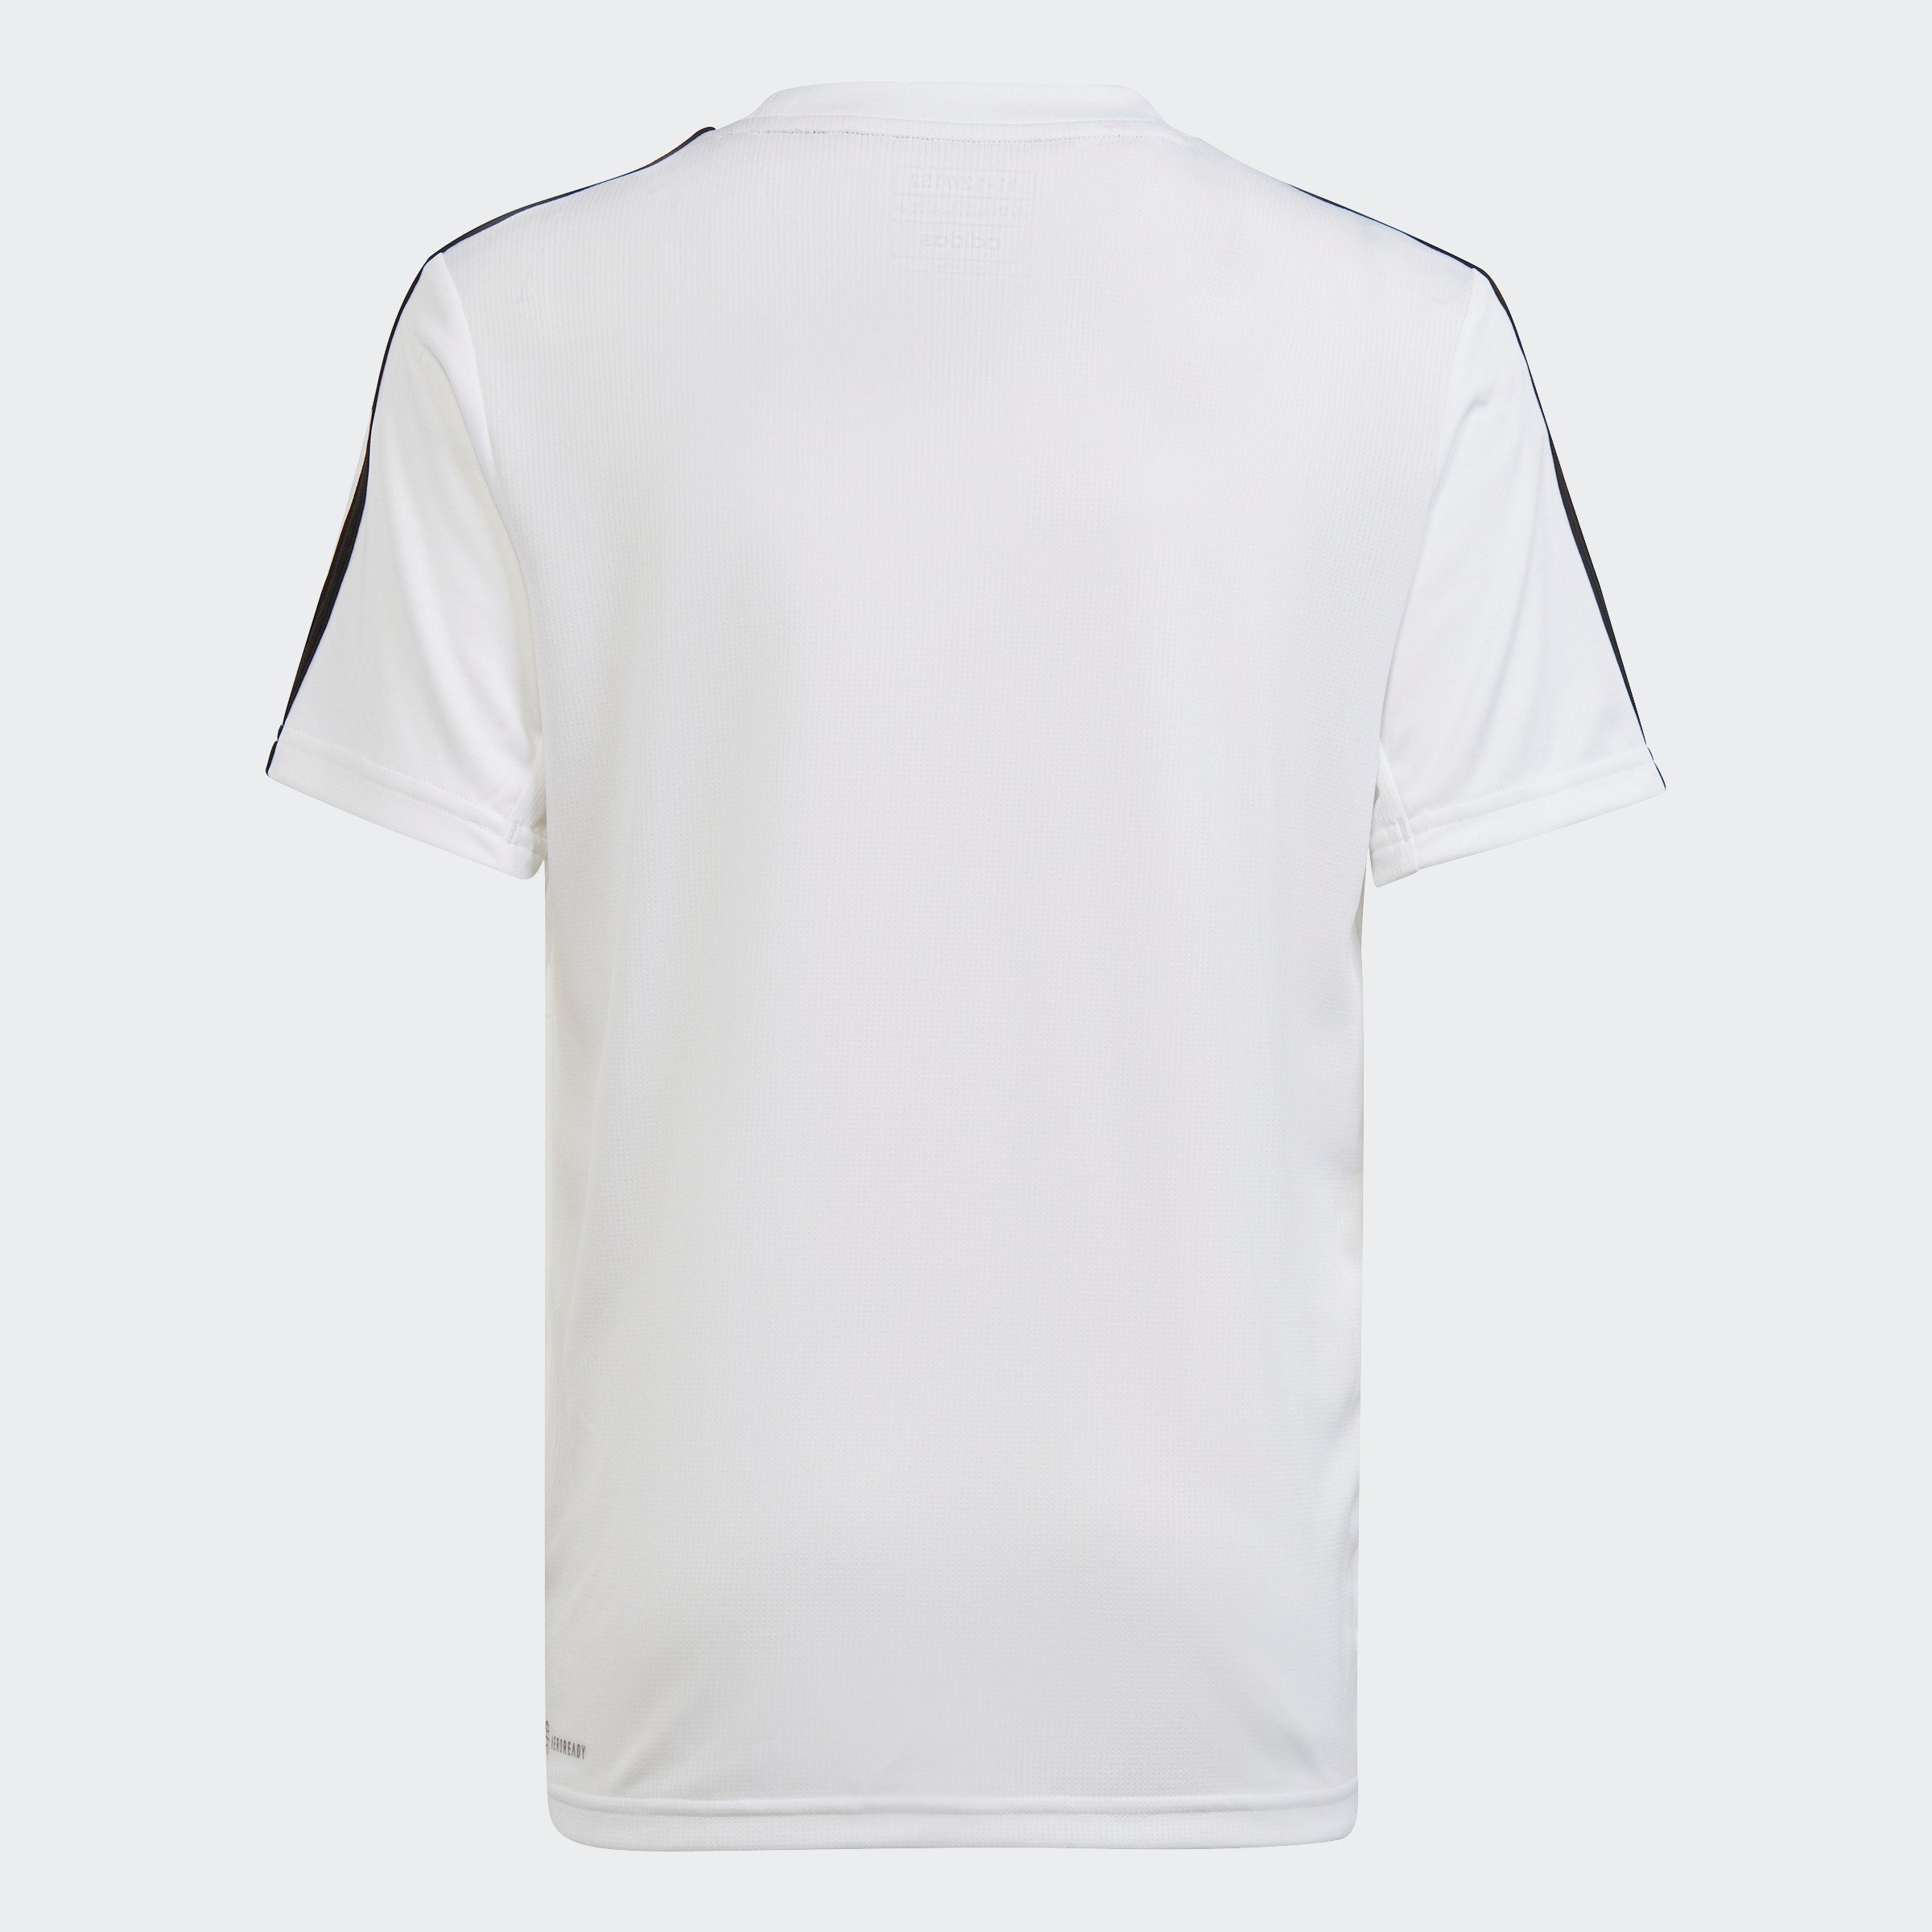 AEROREADY 3-STREIFEN / ESSENTIALS Sportswear REGULAR-FIT White Black adidas T-Shirt TRAIN